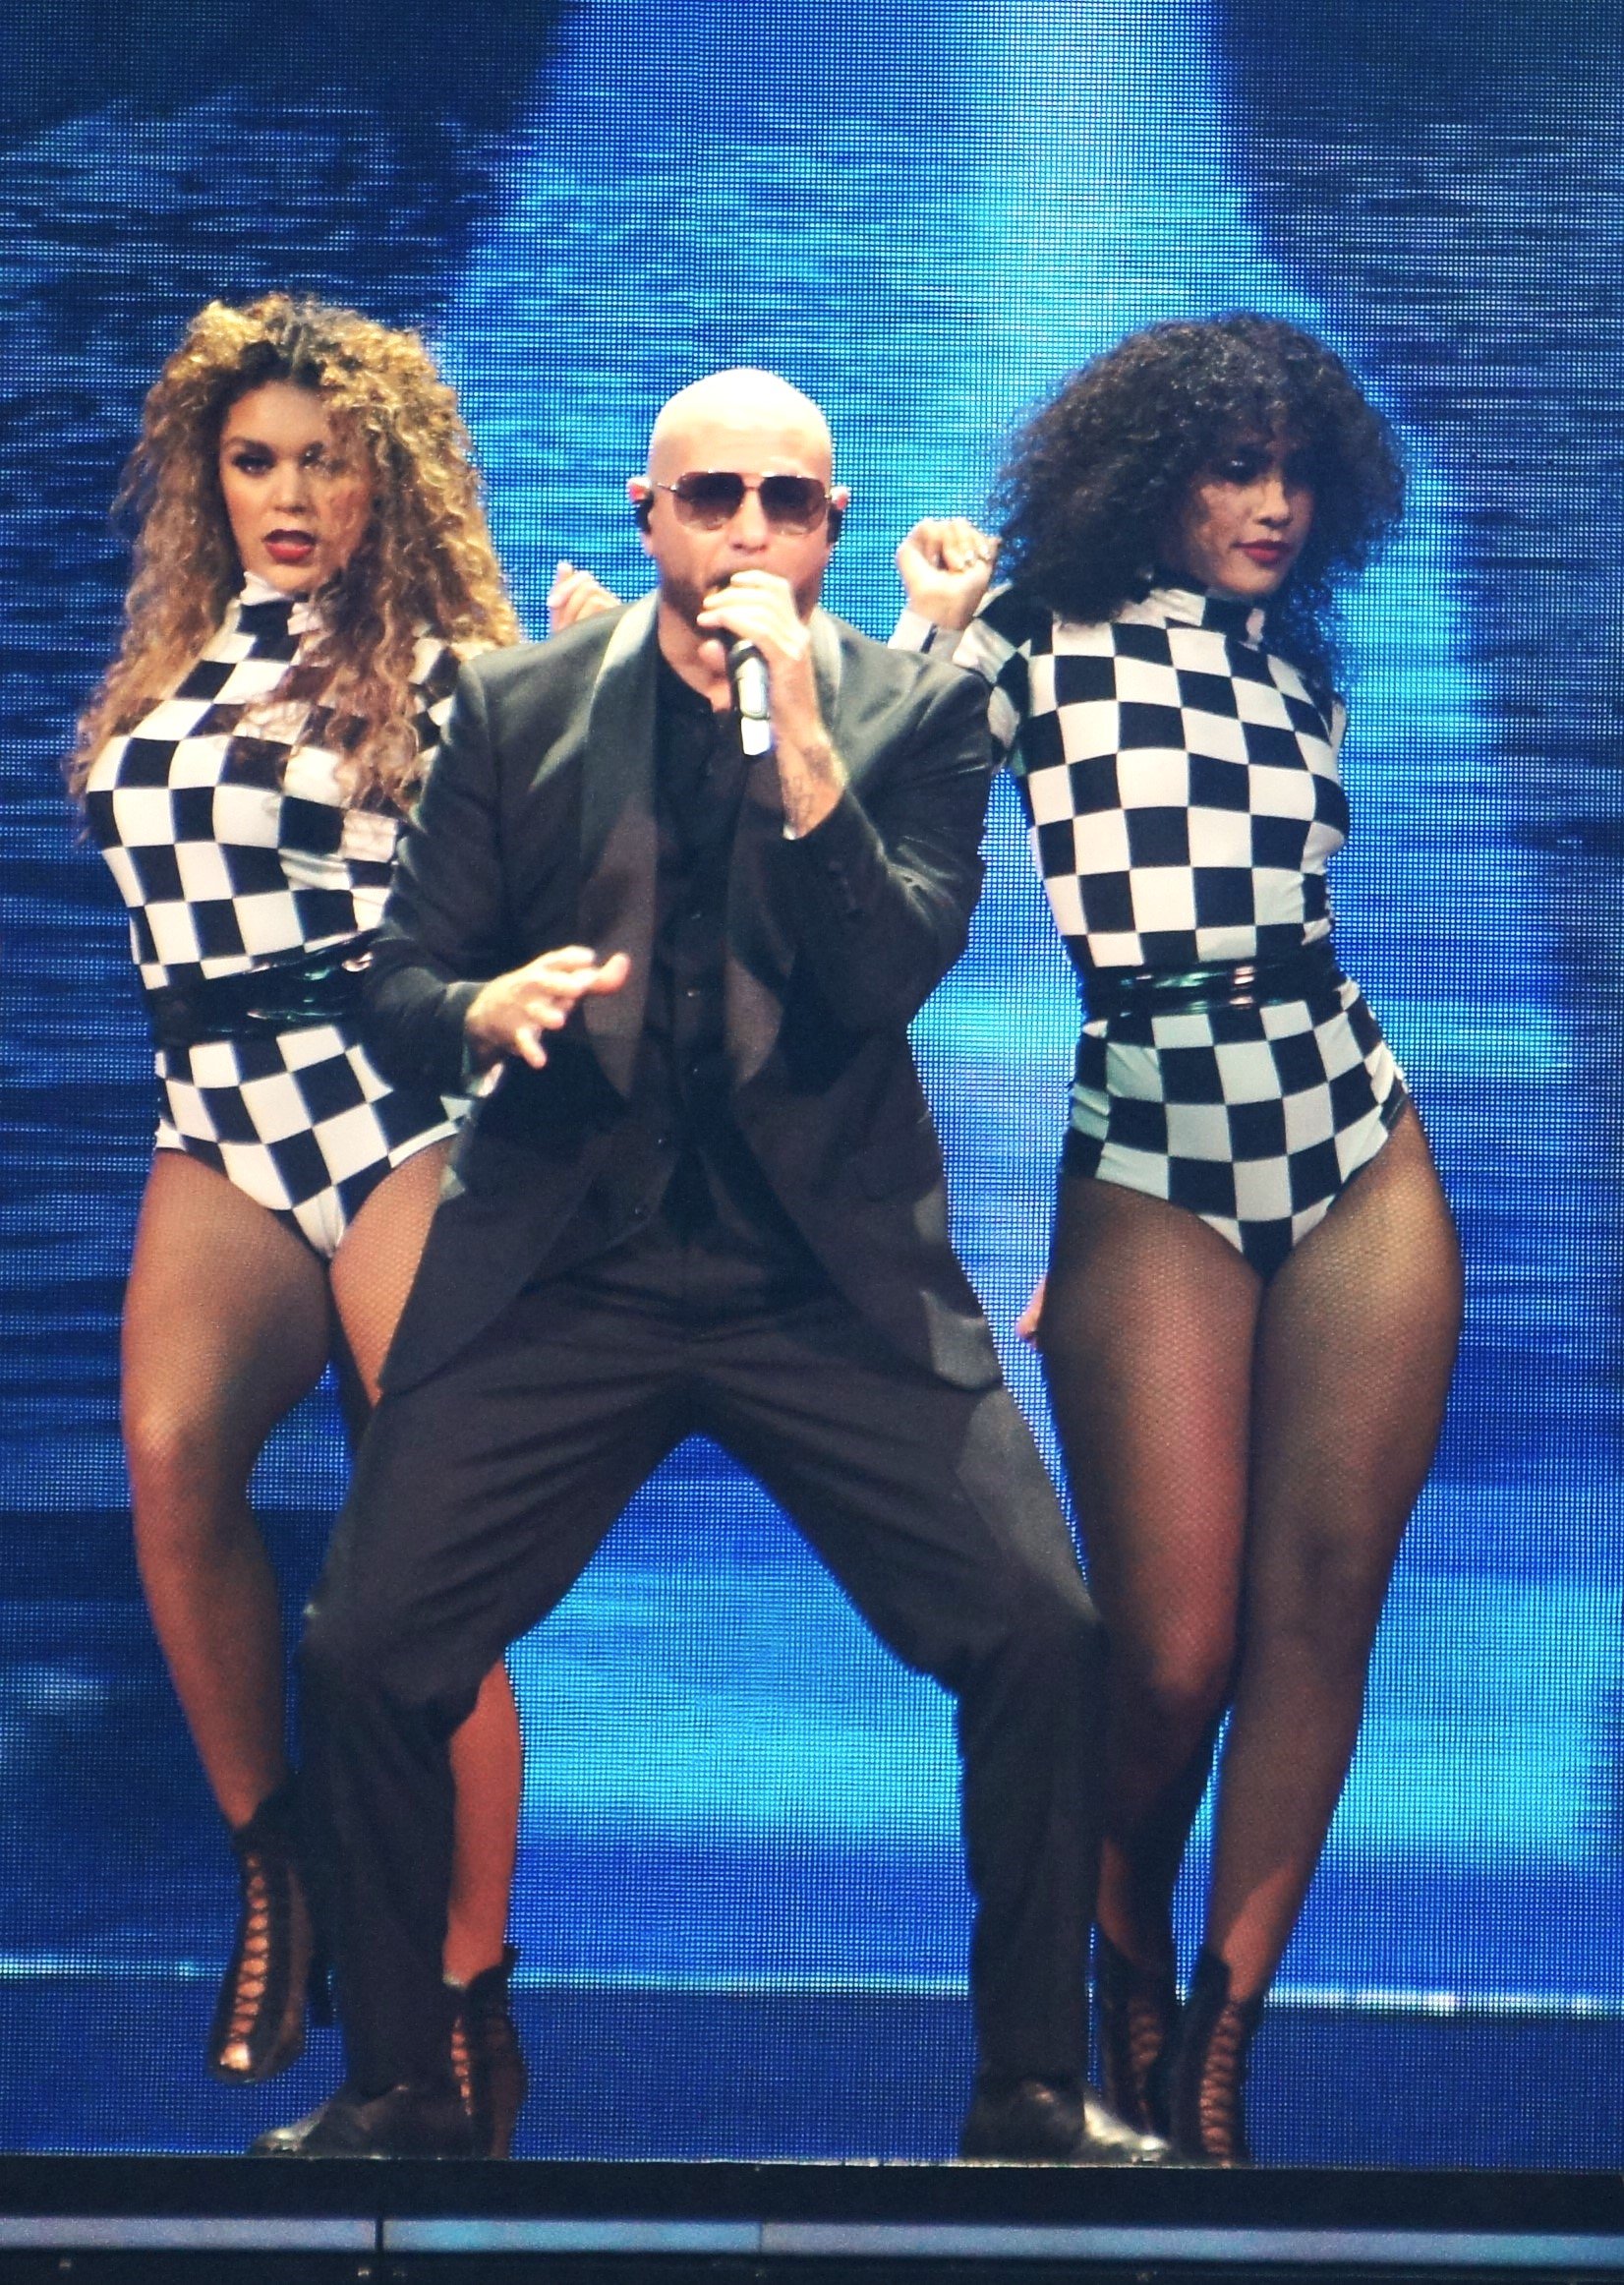 Pitbull and dancers